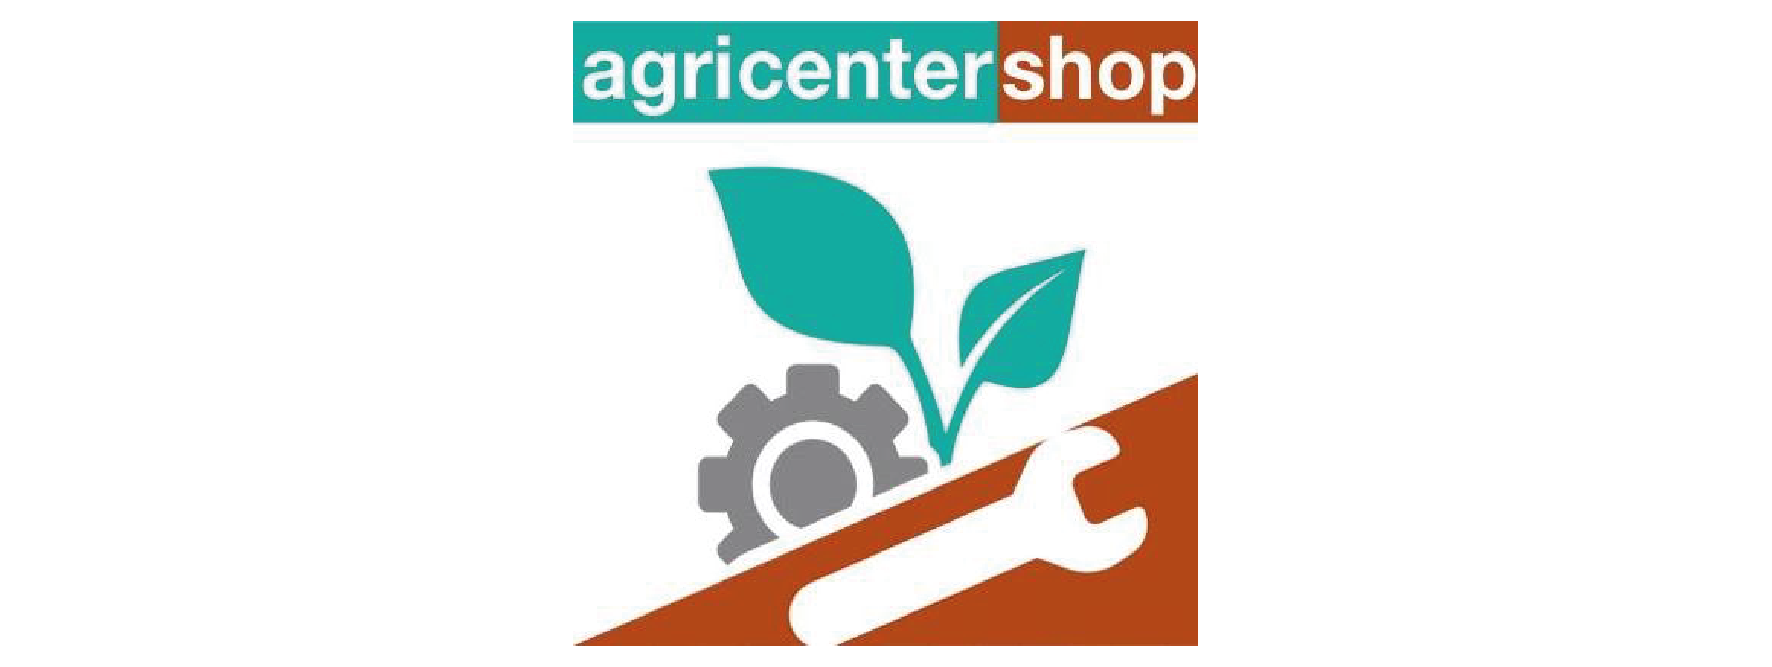 Agri Center Shop